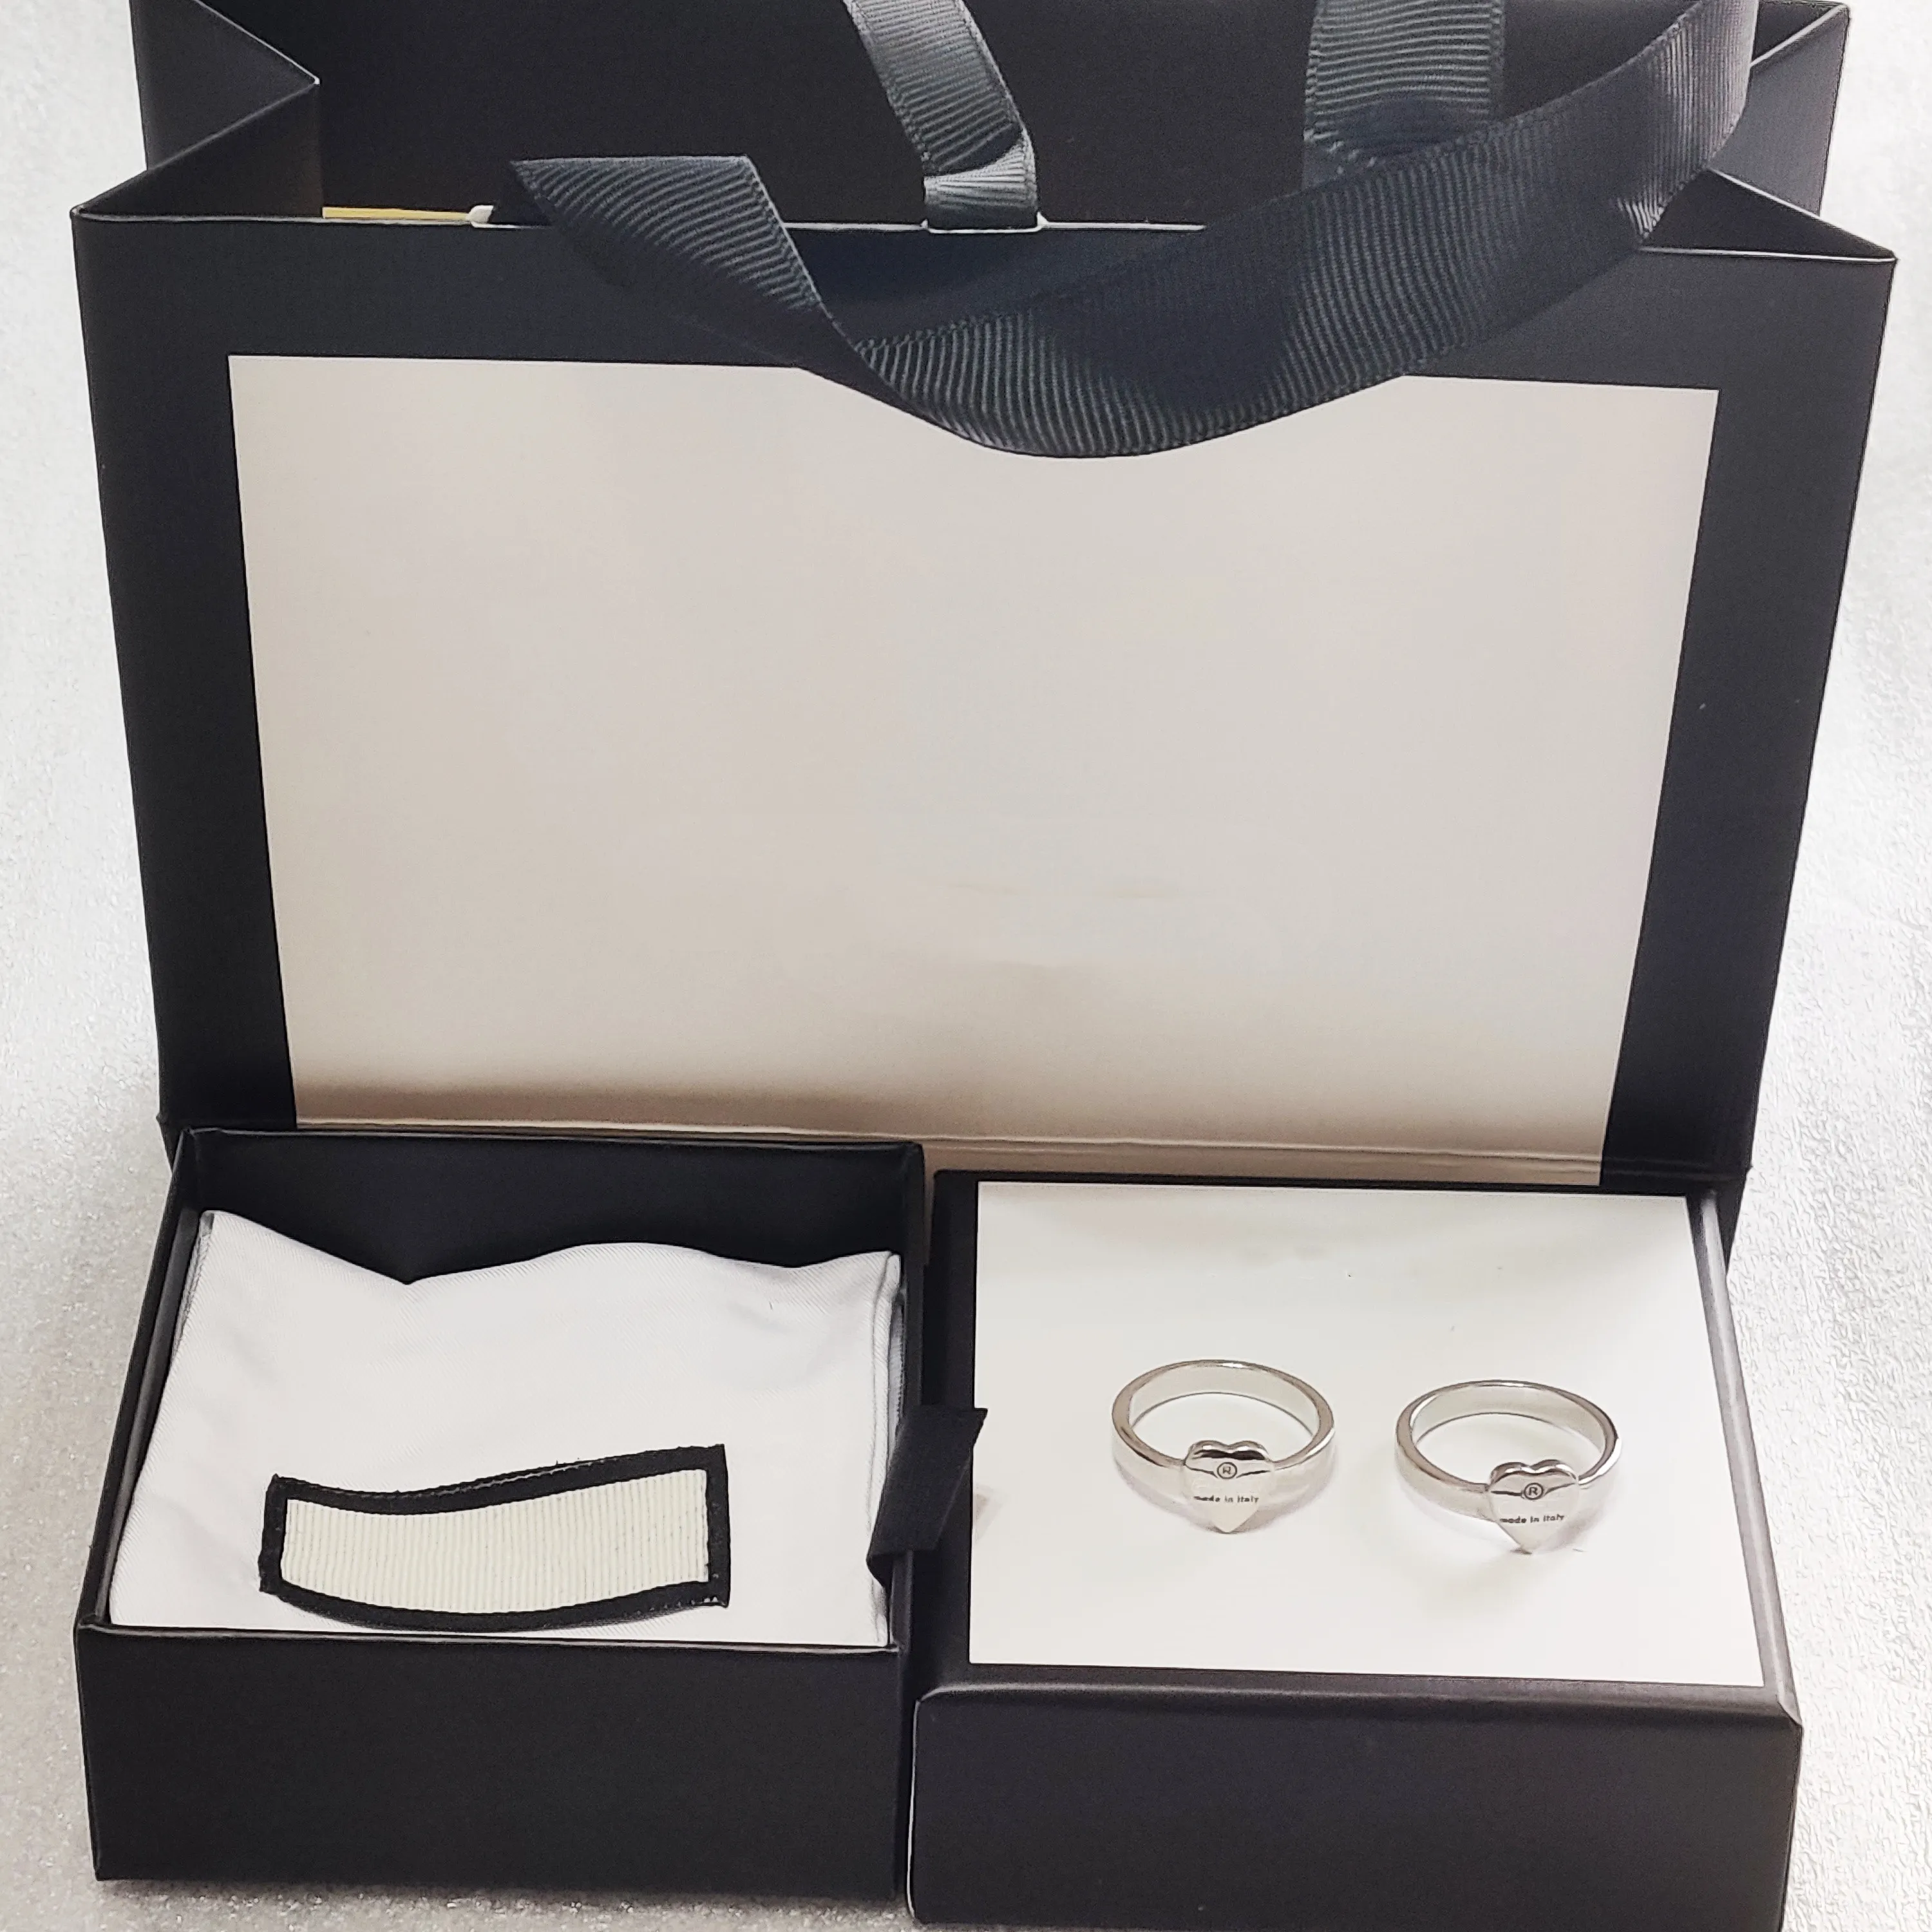 Top dise￱ador de lujo anillo de moda anillos de coraz￳n para mujeres dise￱o original de gran calidad anillos de amor suministro de joyas al por mayor nrj